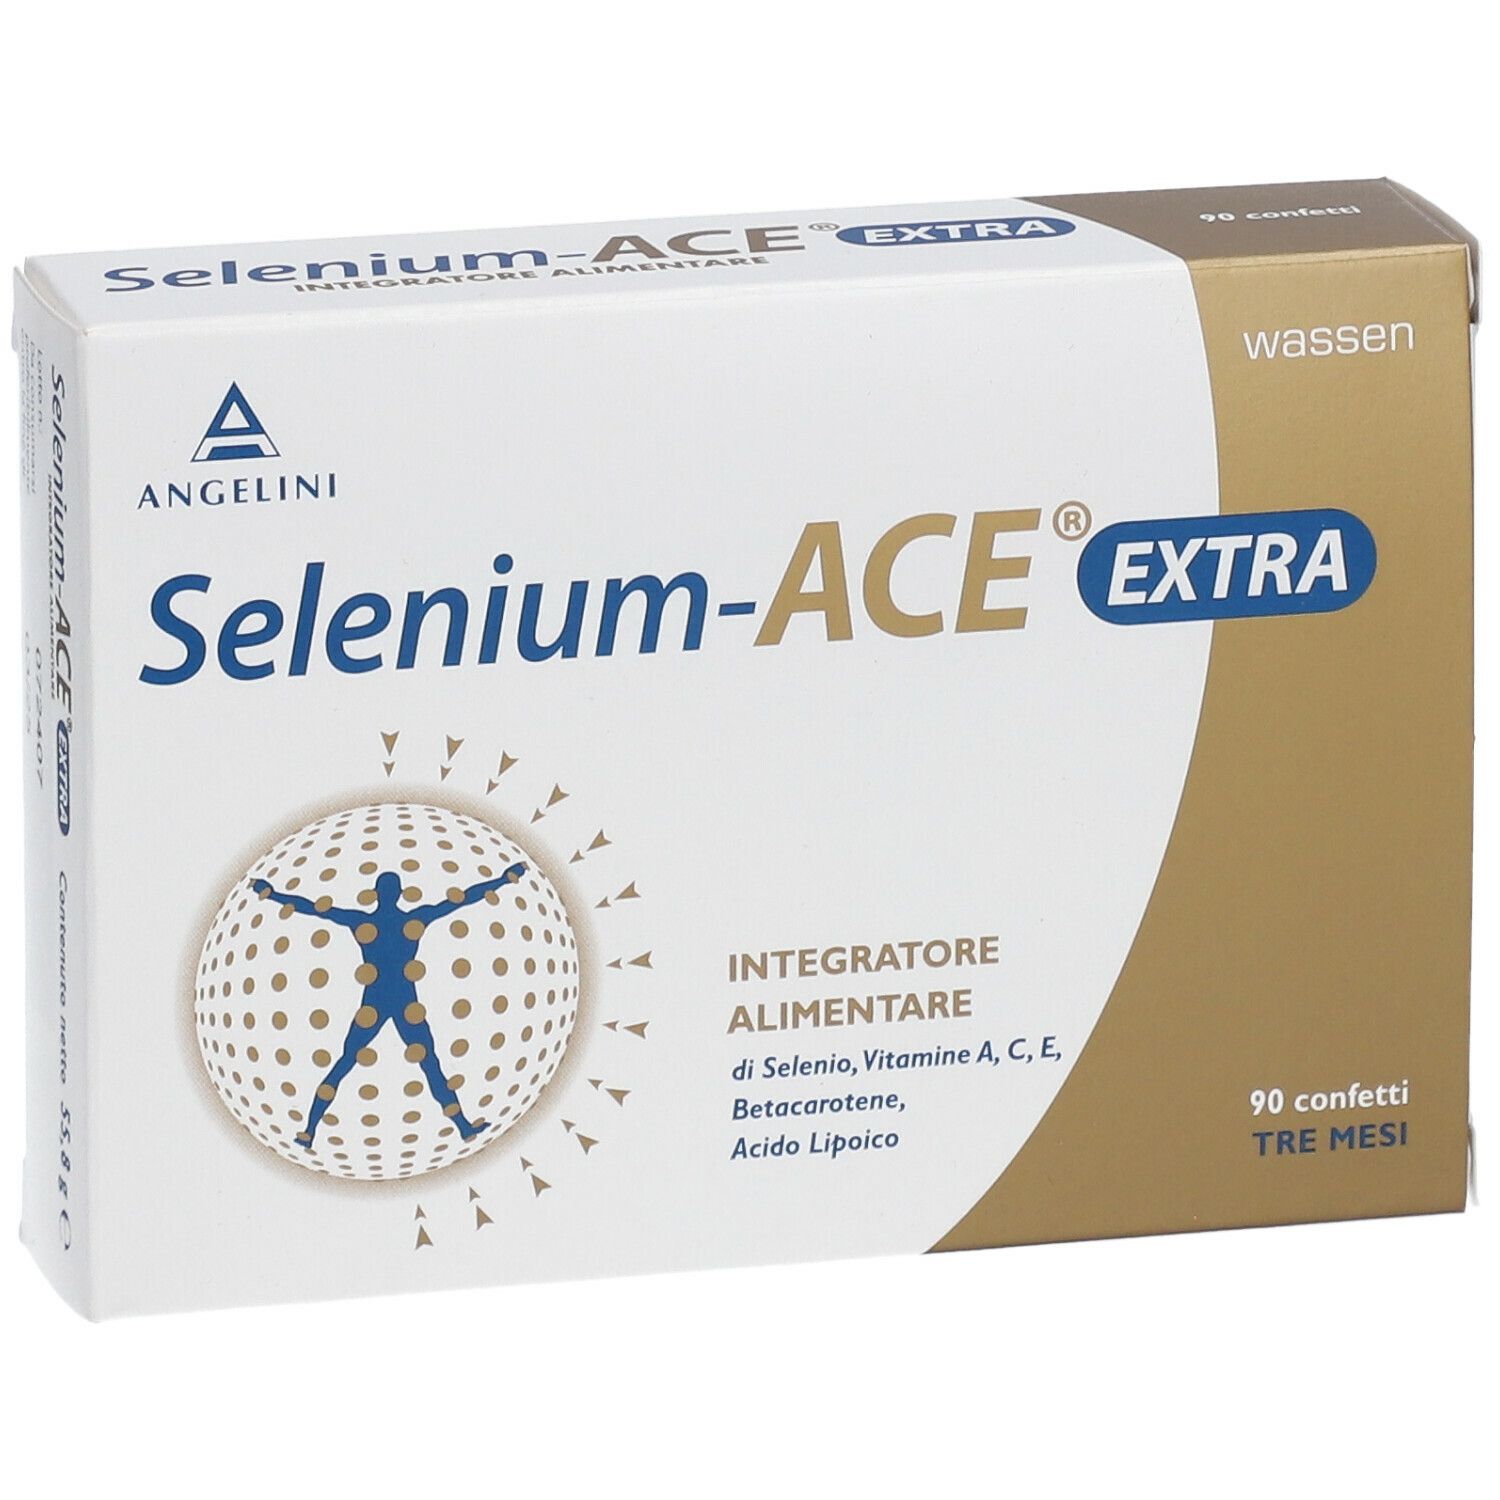 Angelini Selenium-ACE® Extra 90 confetti